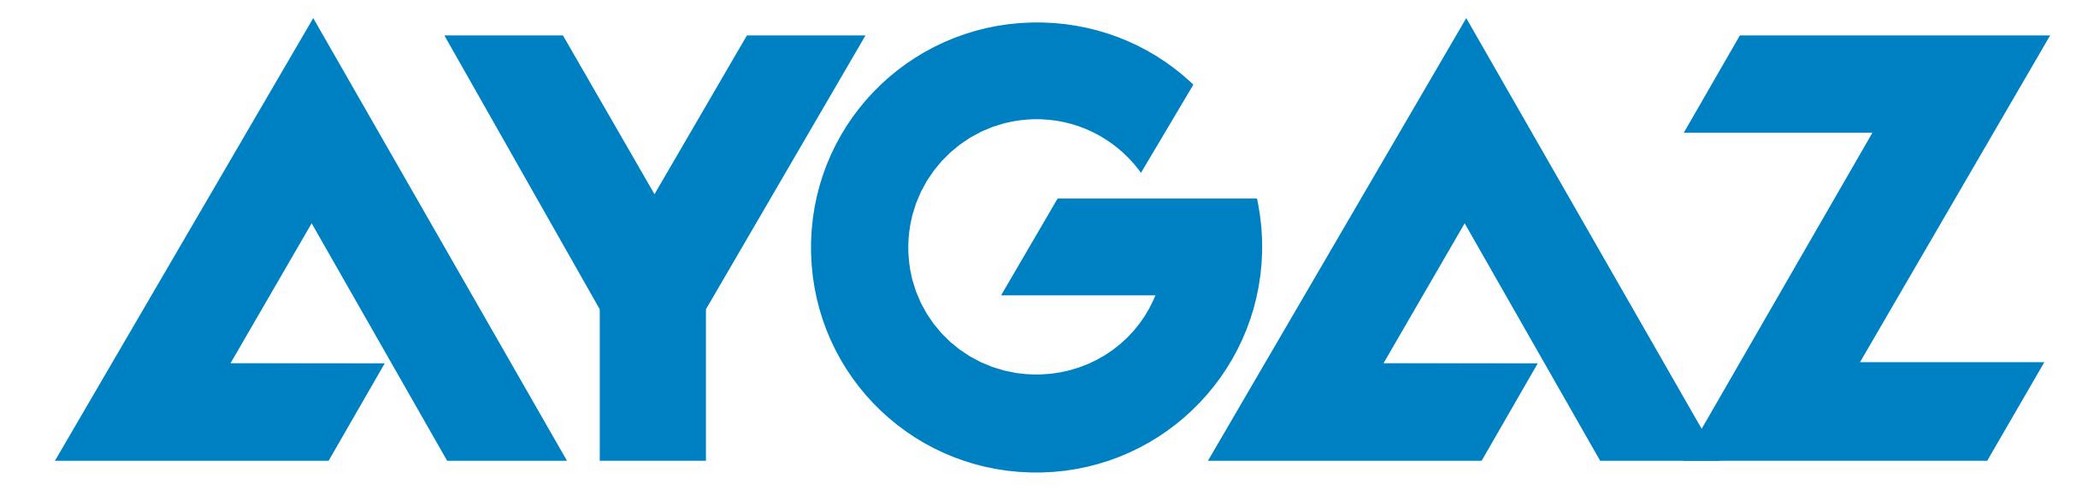 Aygaz Otogaz Logo Vector